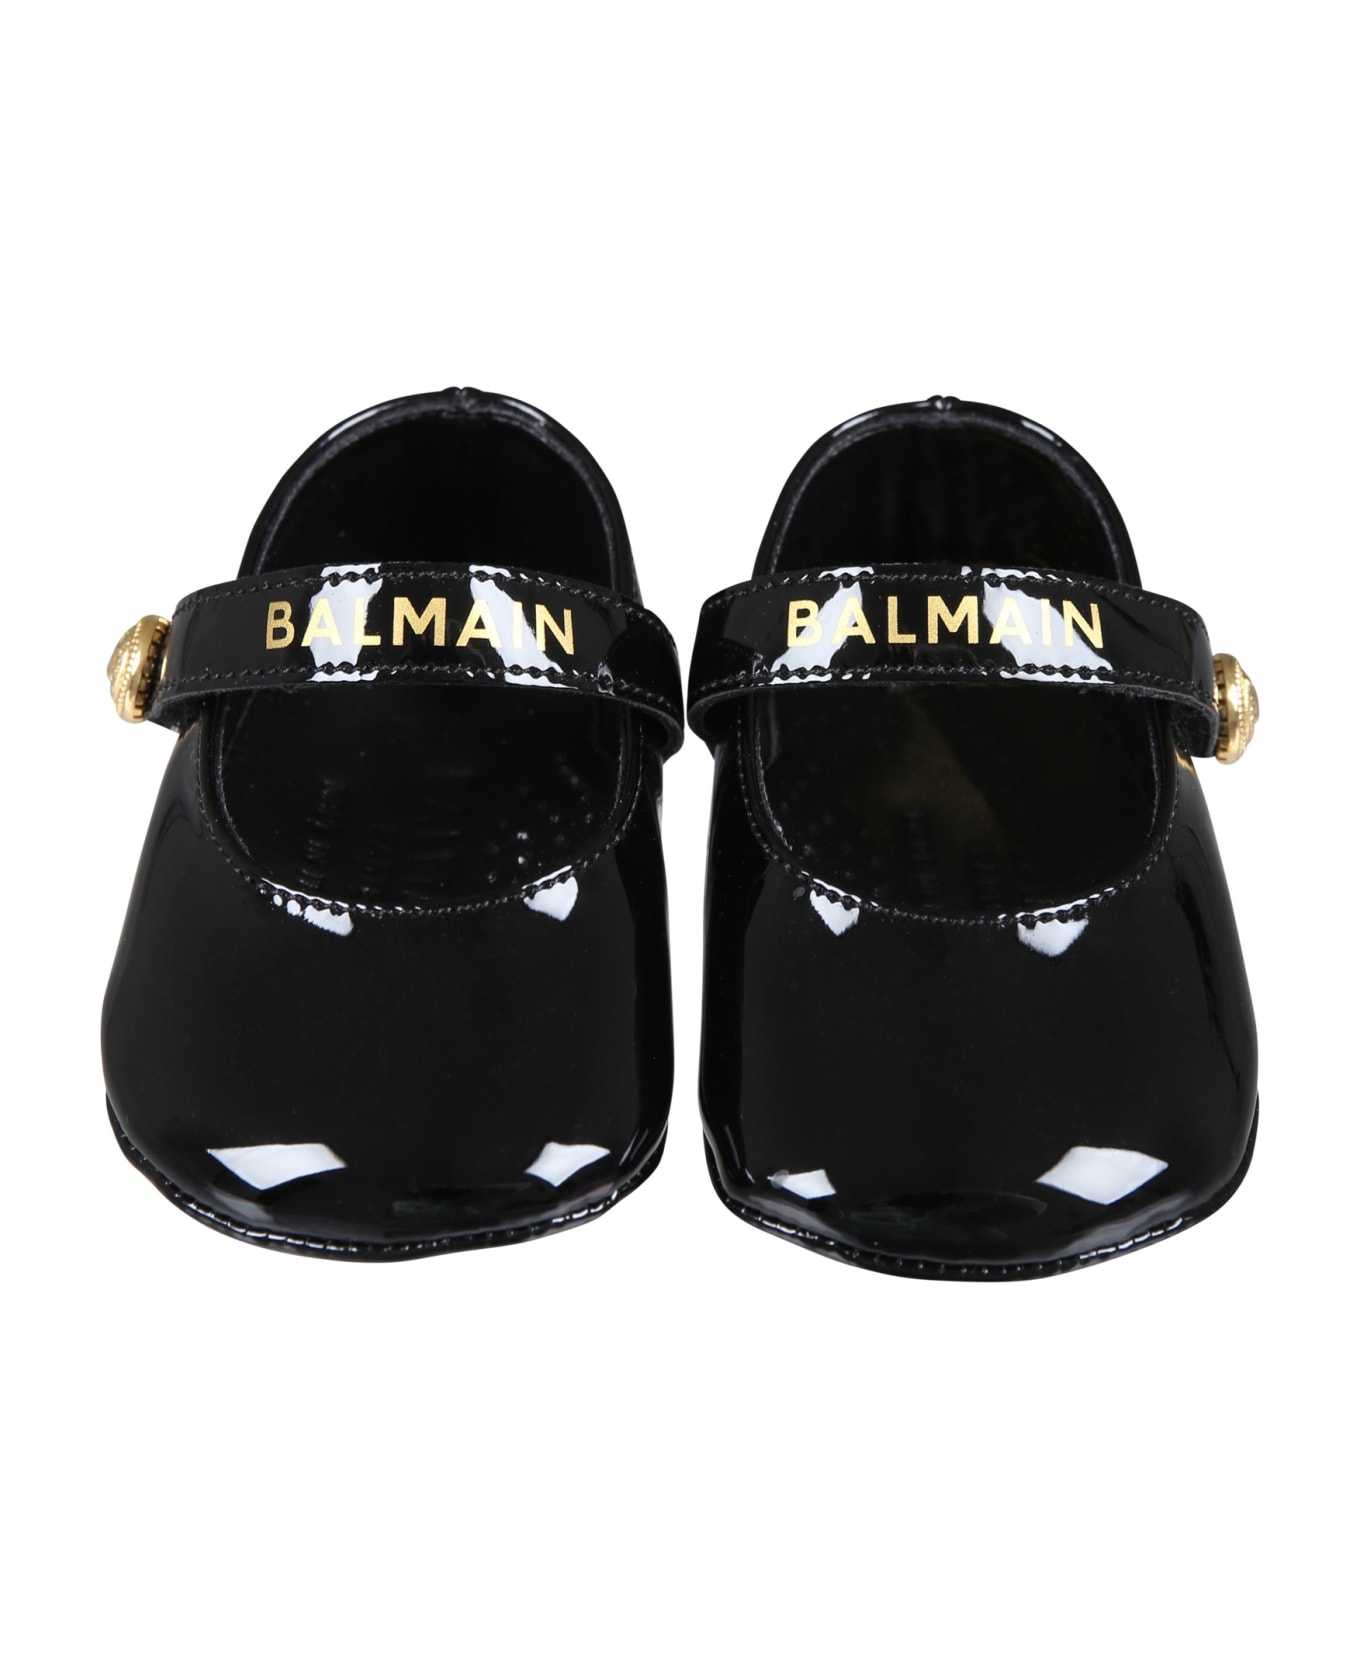 Balmain Black Ballet Flats For Baby Girl With Logo - Black シューズ